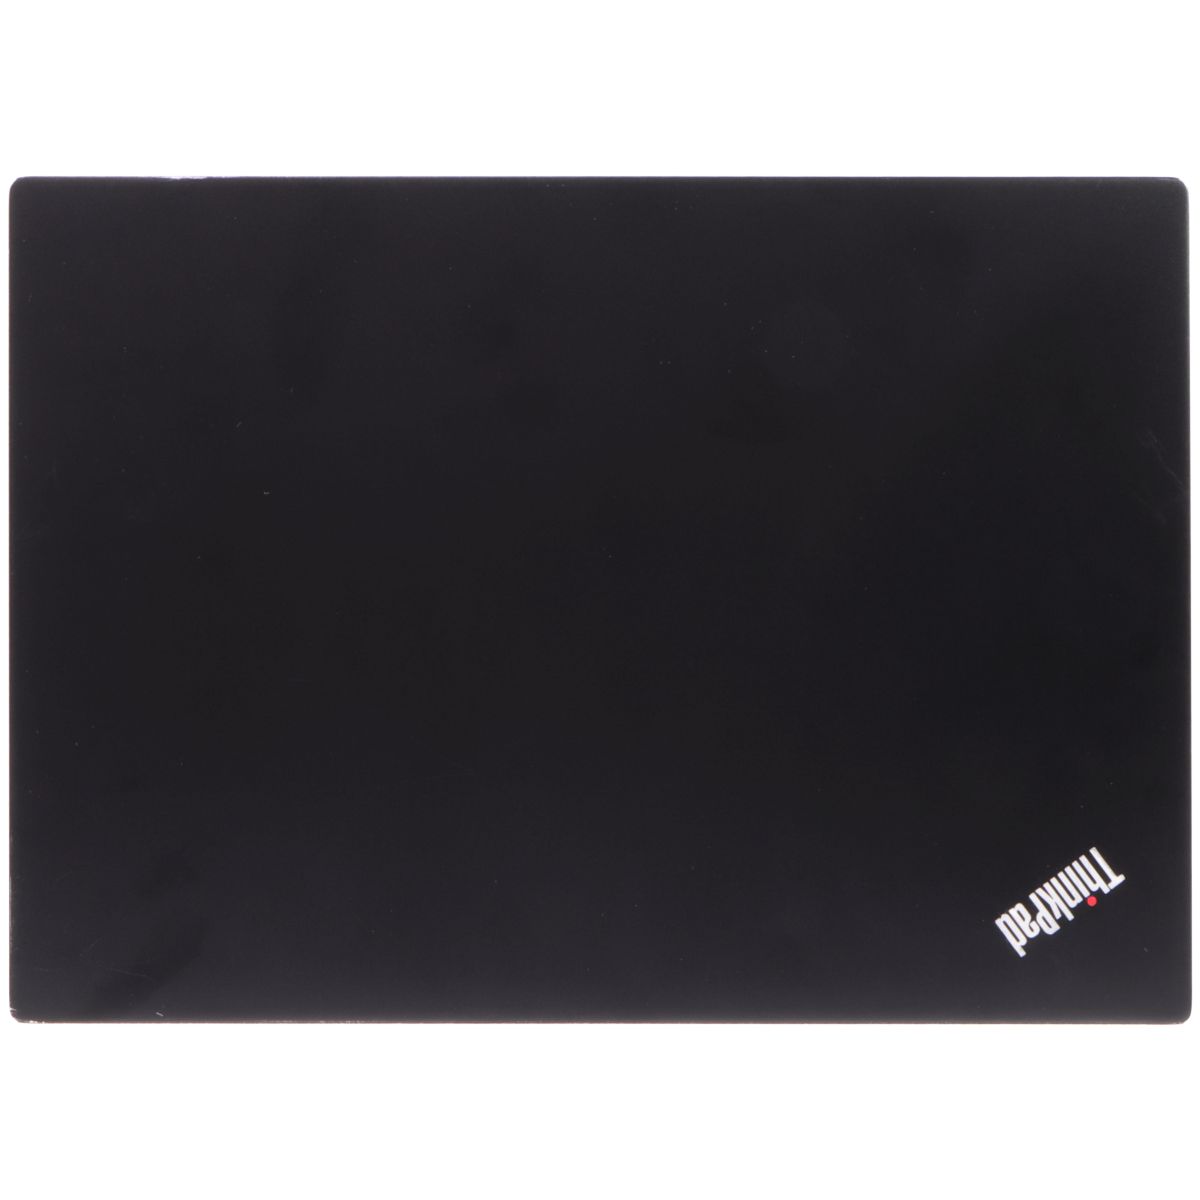 Lenovo ThinkPad E14 (14.0-inch) Laptop (20RA-004YUS) i5-10210U/256GB/8GB Laptops - PC Laptops & Netbooks Lenovo    - Simple Cell Bulk Wholesale Pricing - USA Seller